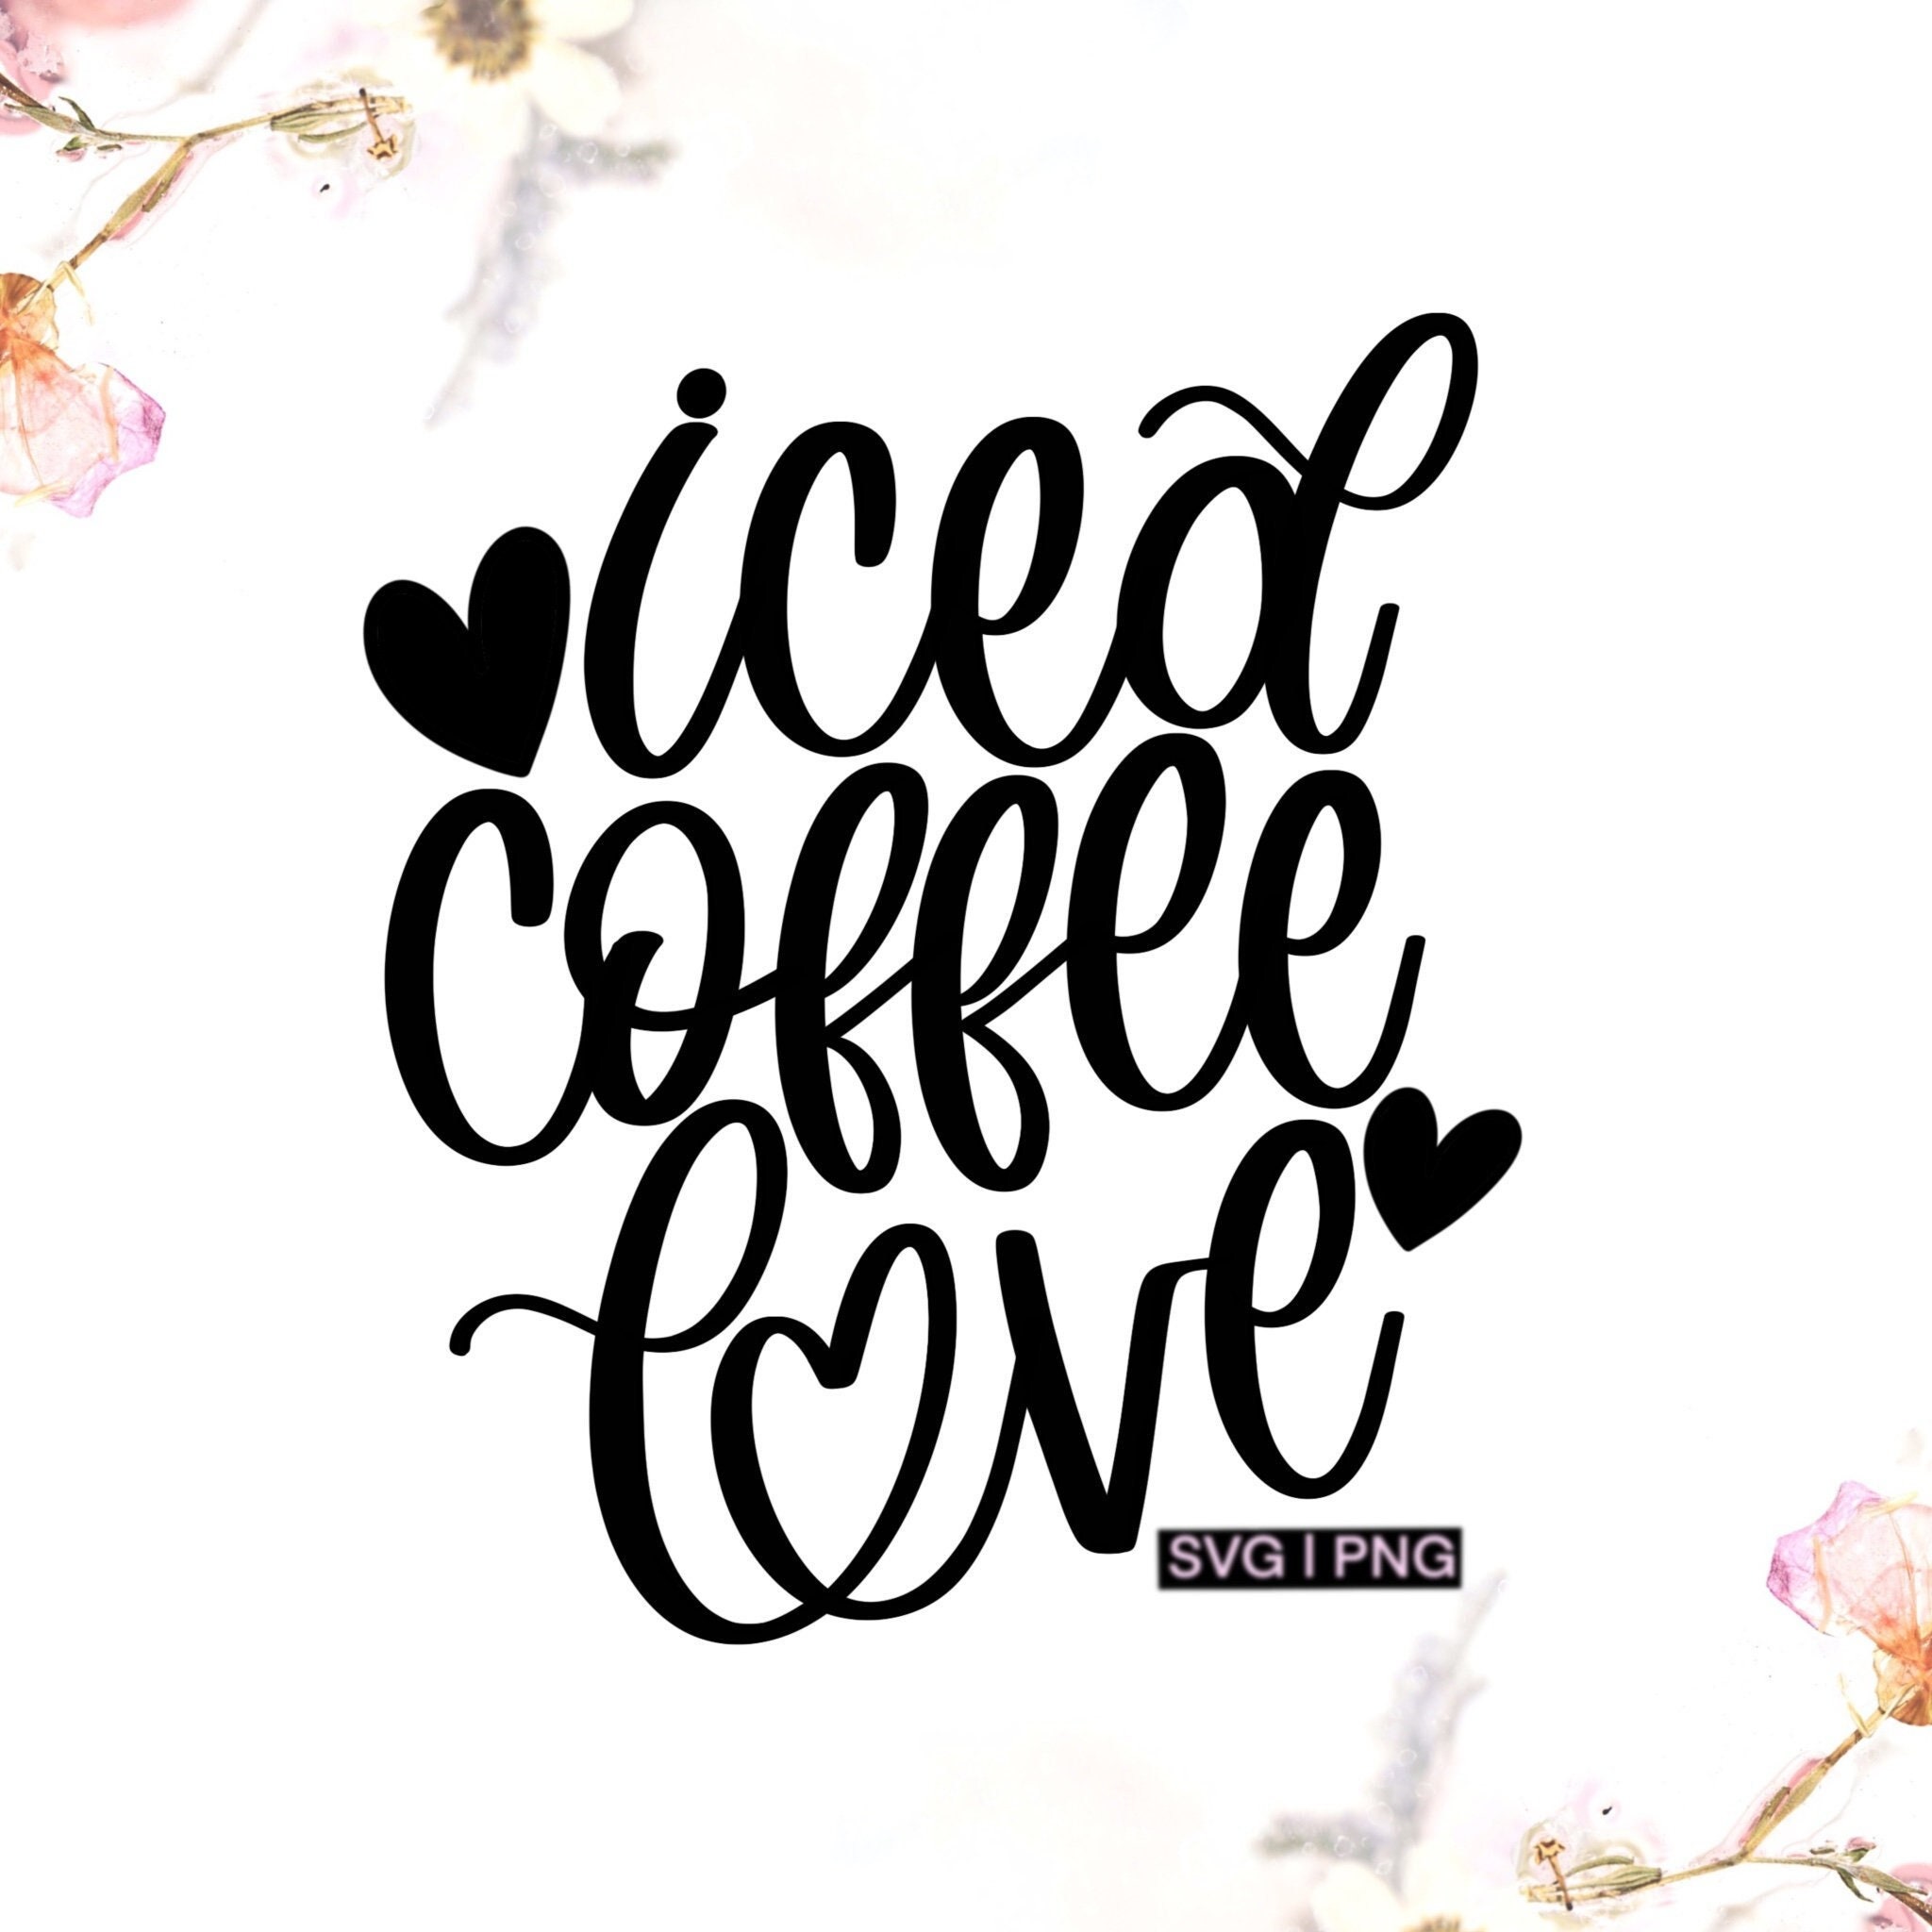 Coffee Cups SVG, Coffee Lover SVG, I Love Coffee SVG, Iced Coffee